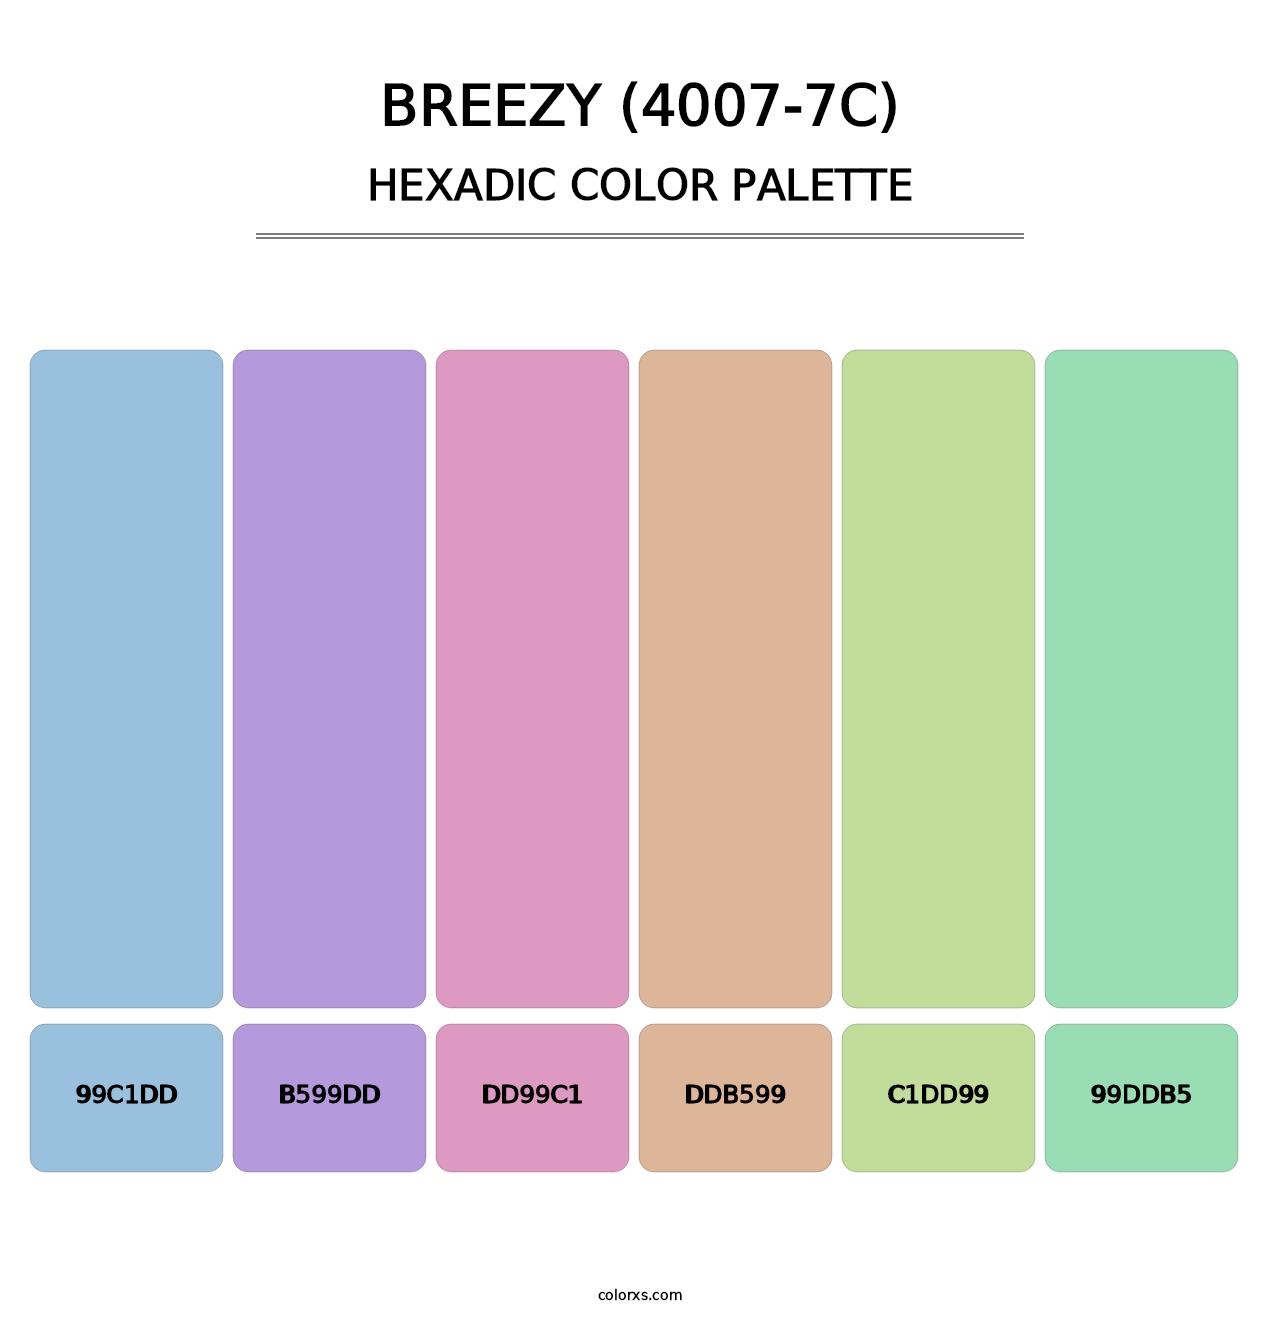 Breezy (4007-7C) - Hexadic Color Palette